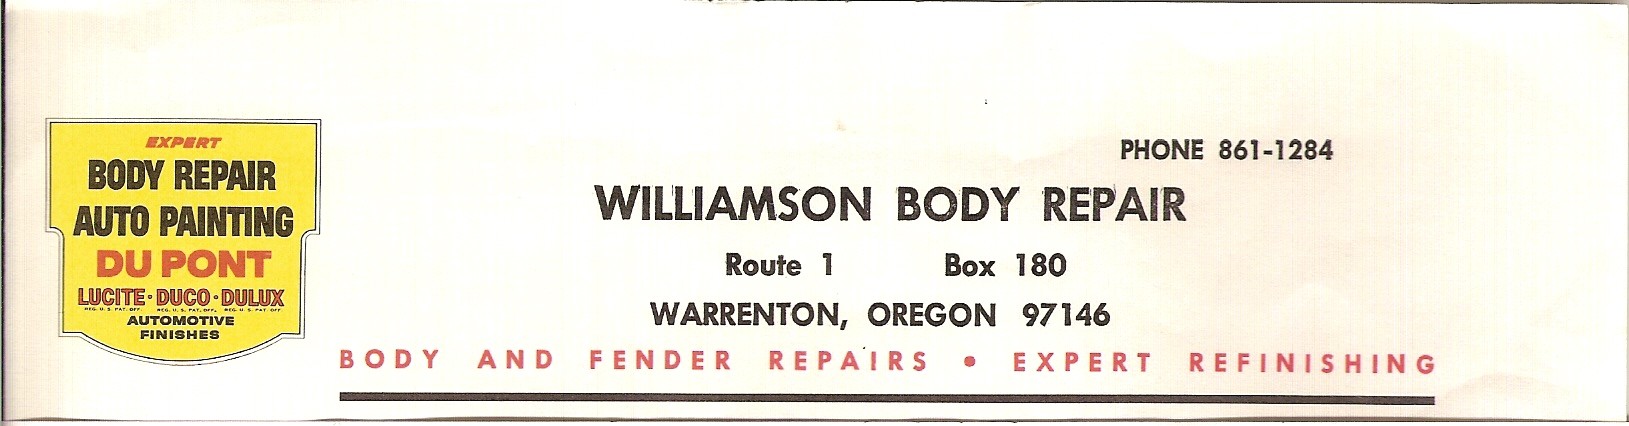 Williamson Body Repair